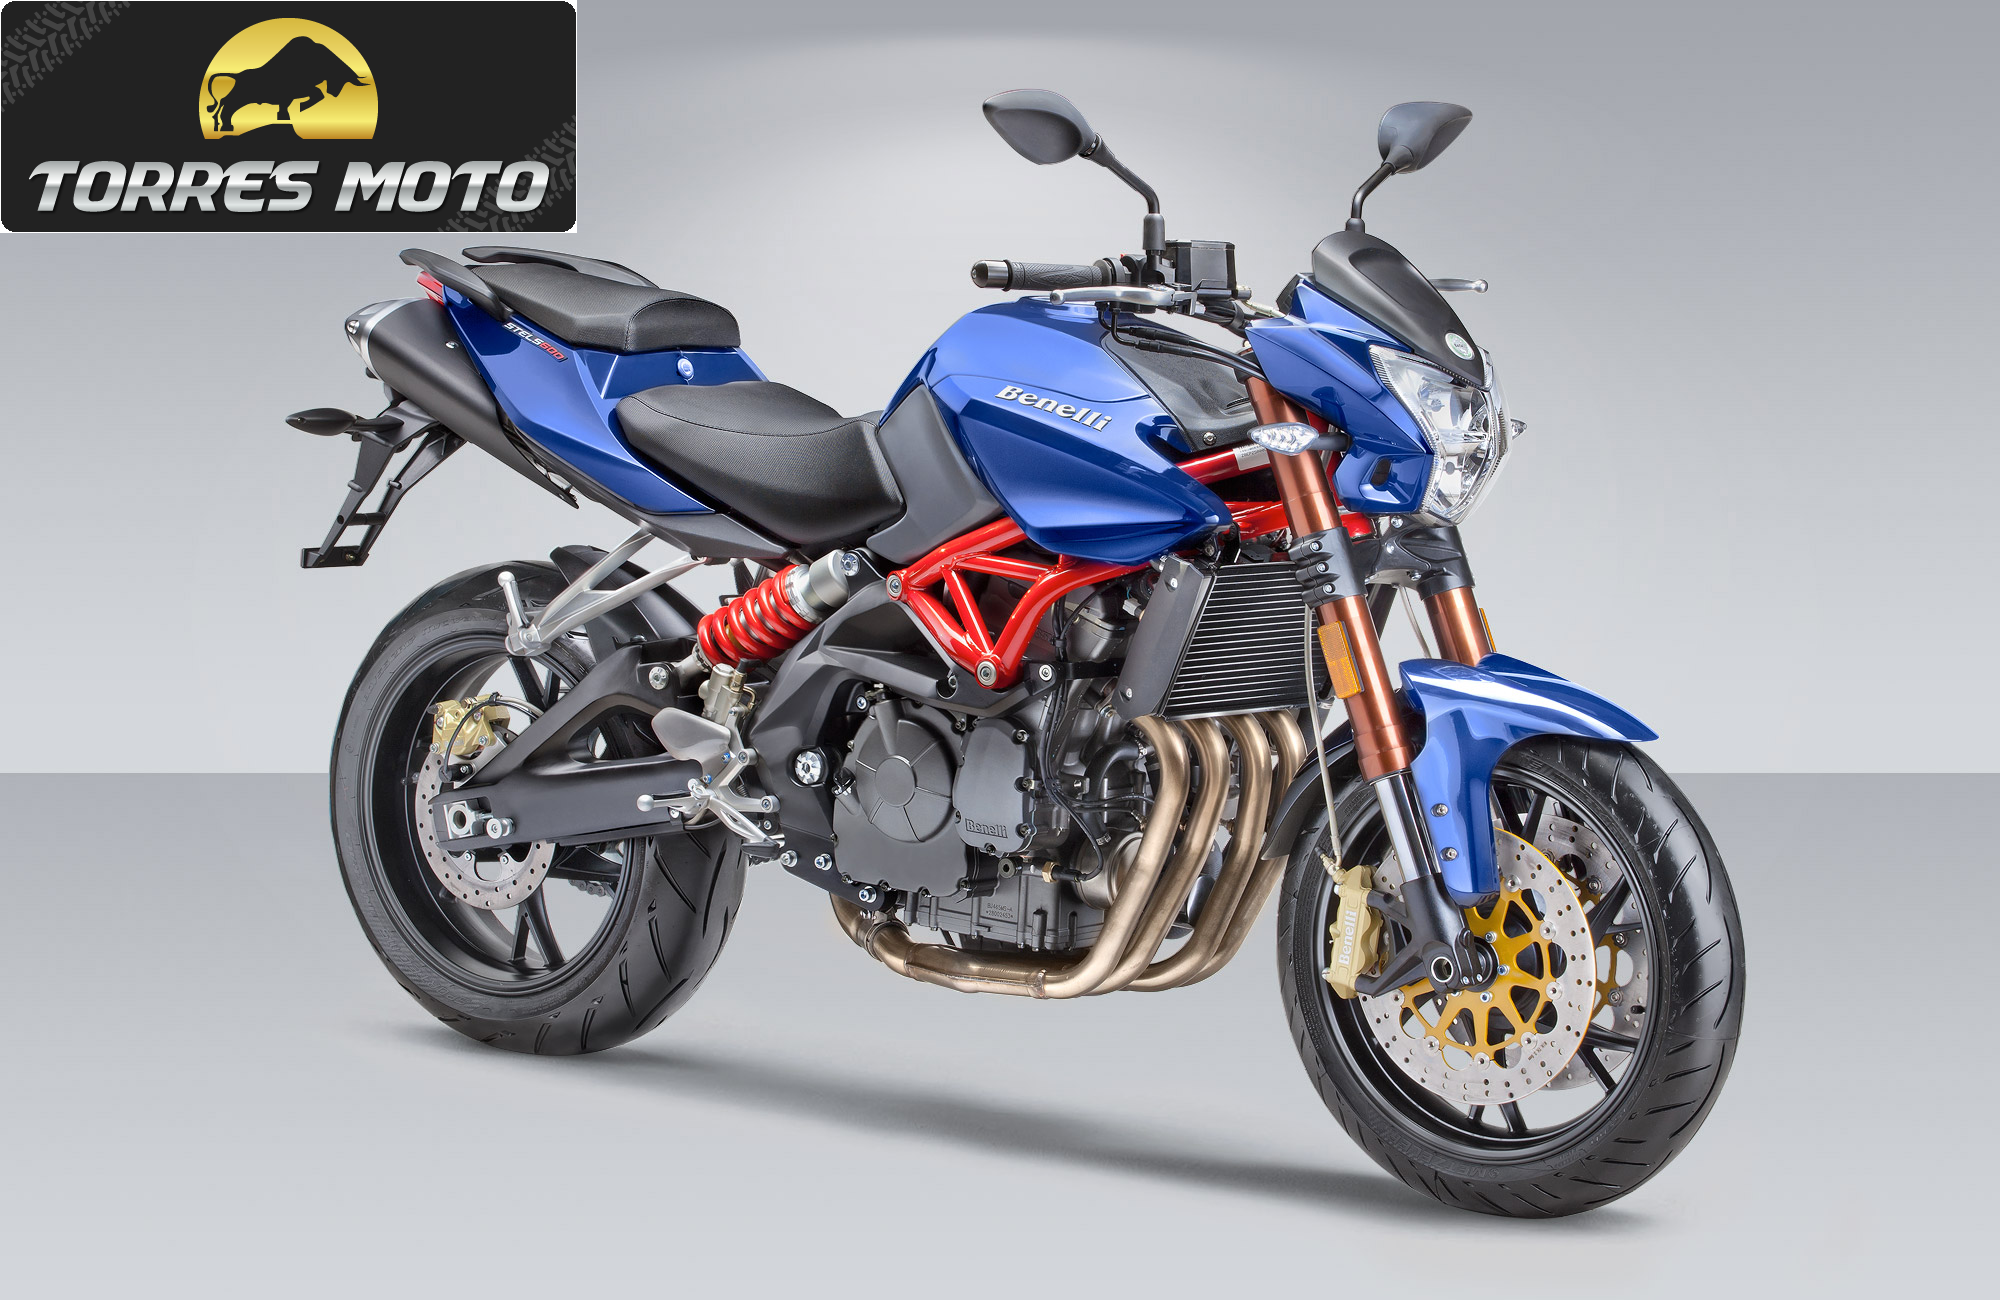 Продается мотоцикл STELS Benelli 600 2014 года